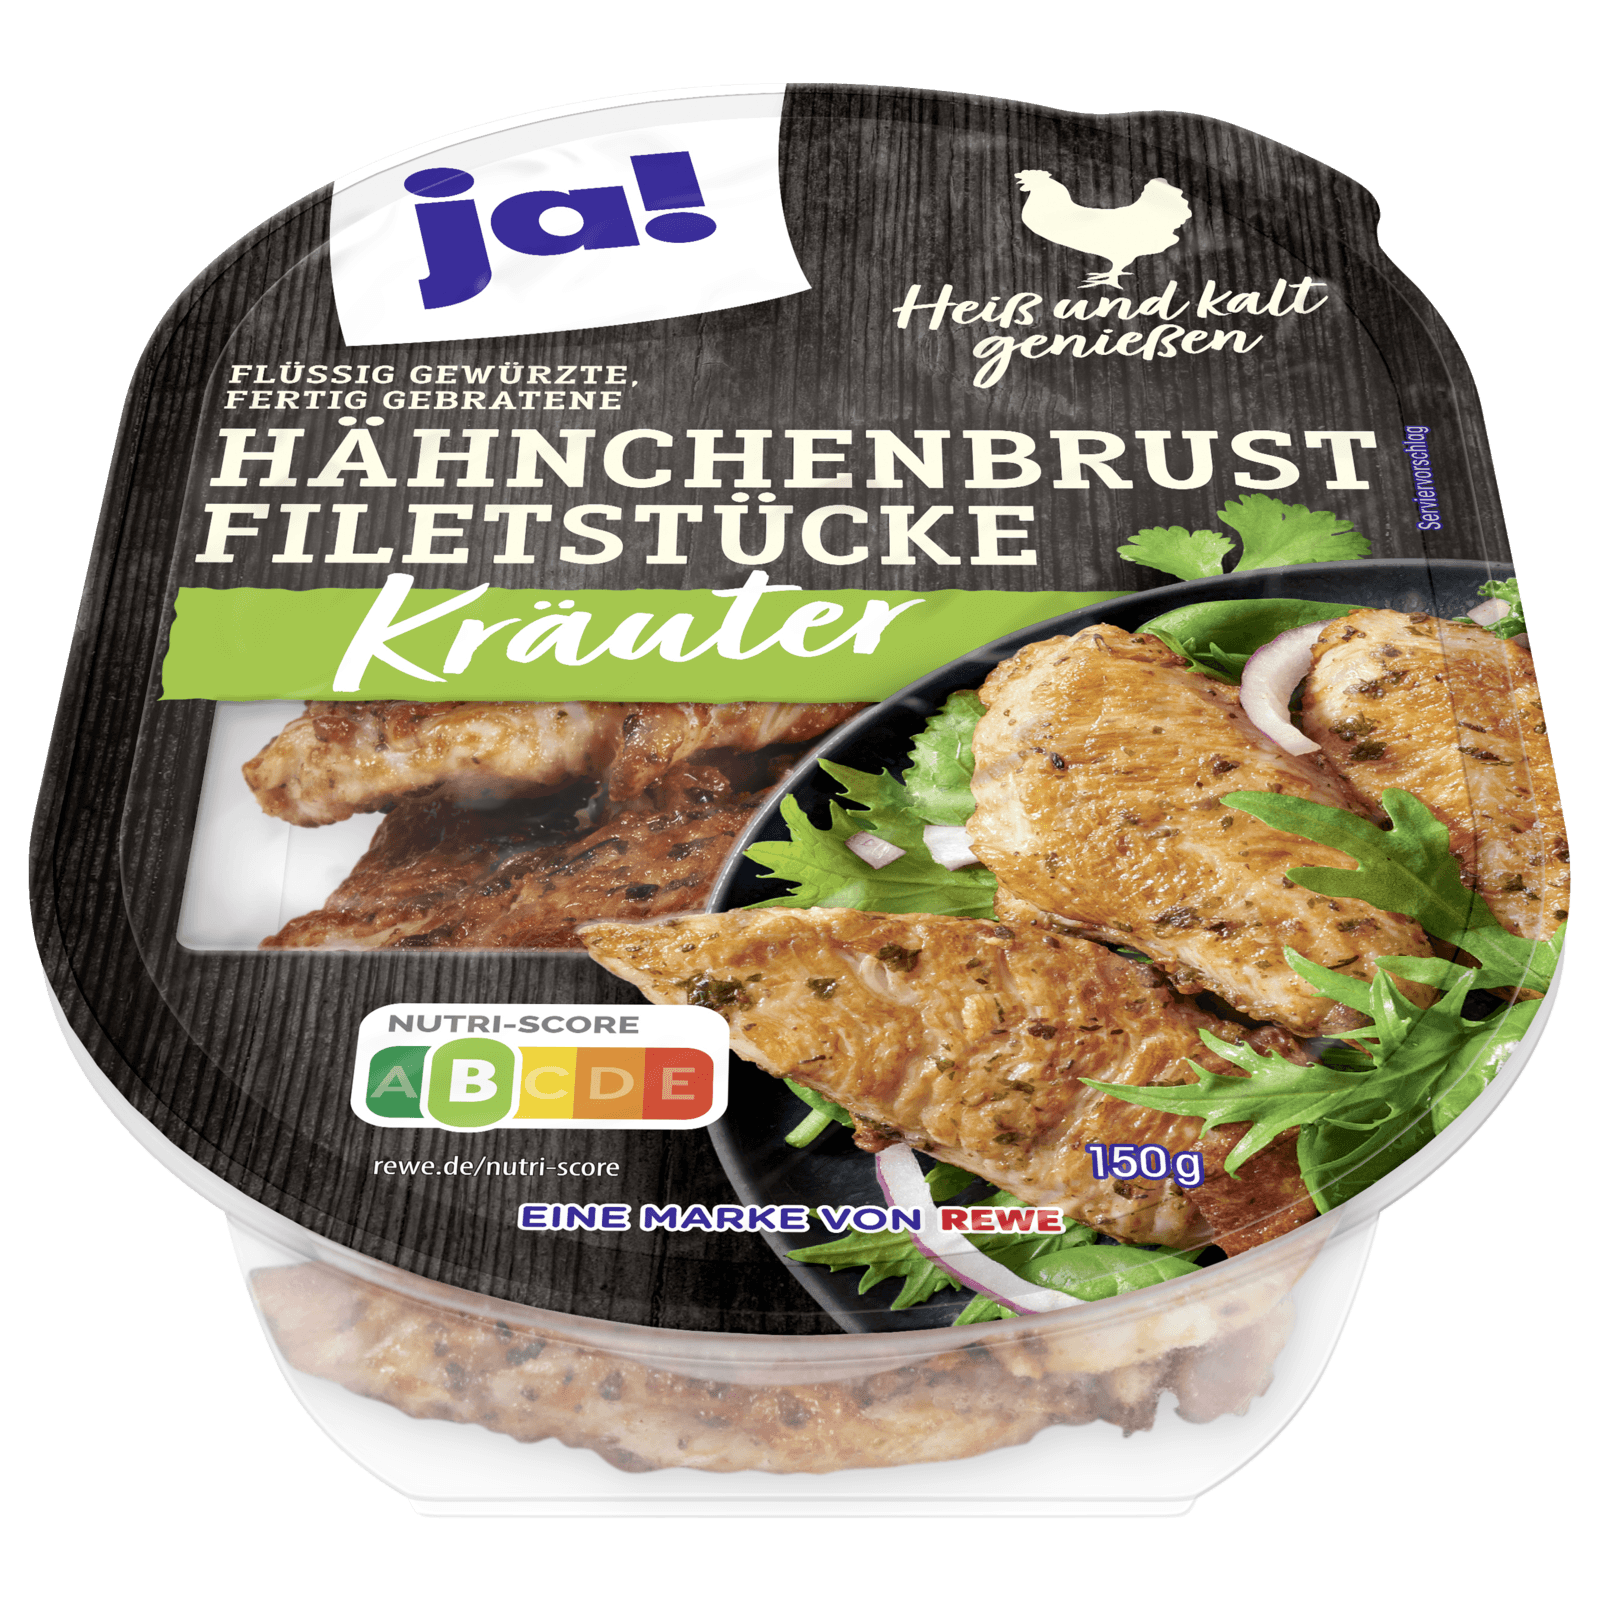 Kräuter ja! REWE Filetstücke bestellen! bei Hähnchenbrust online 150g